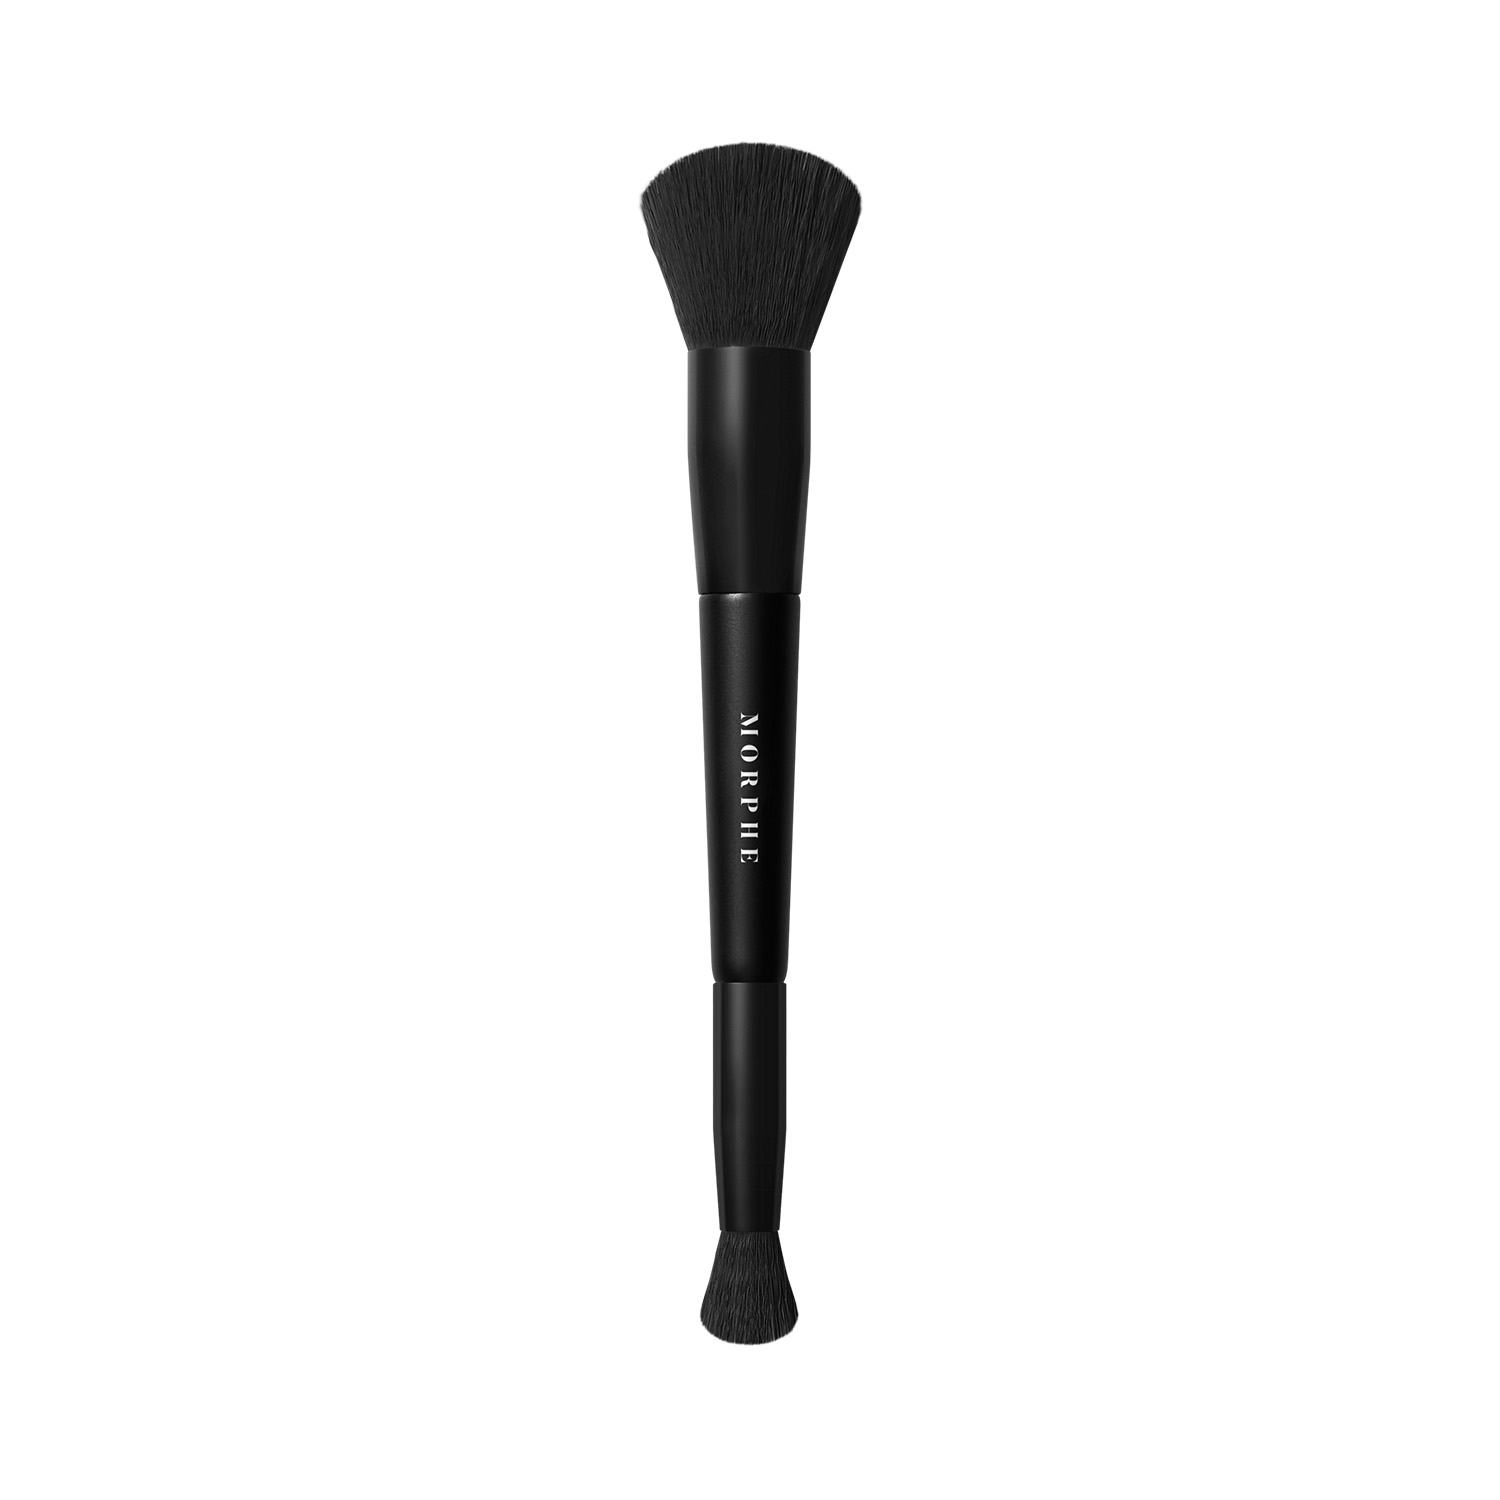 lightform dual-ended foundation brush (brocha para base de maquillaje)